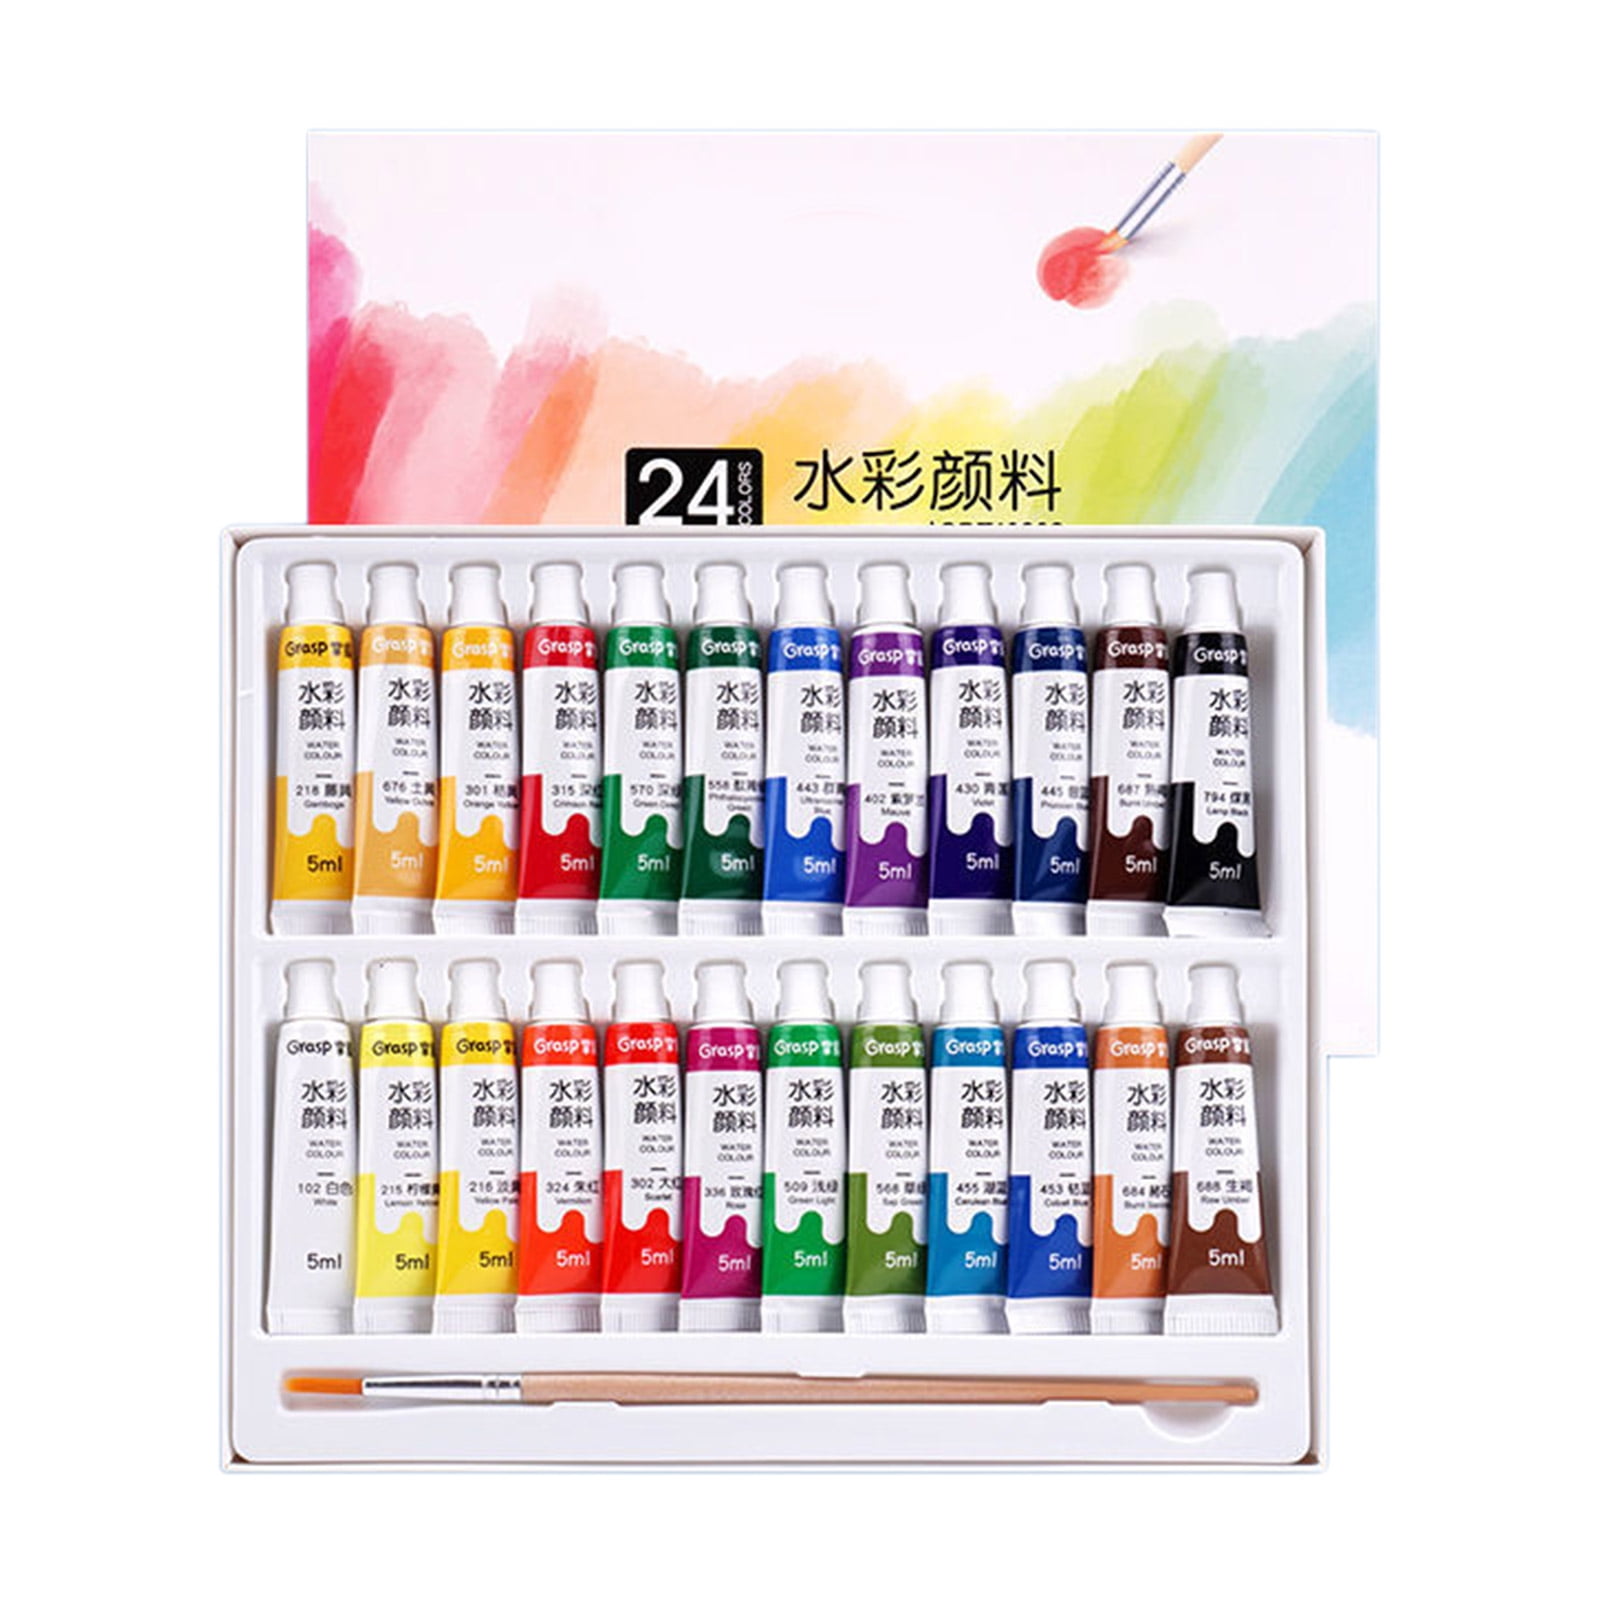 18 PC ACRYLIC PAINT Set Professional Artist Painting Pigment Tubes 12ml